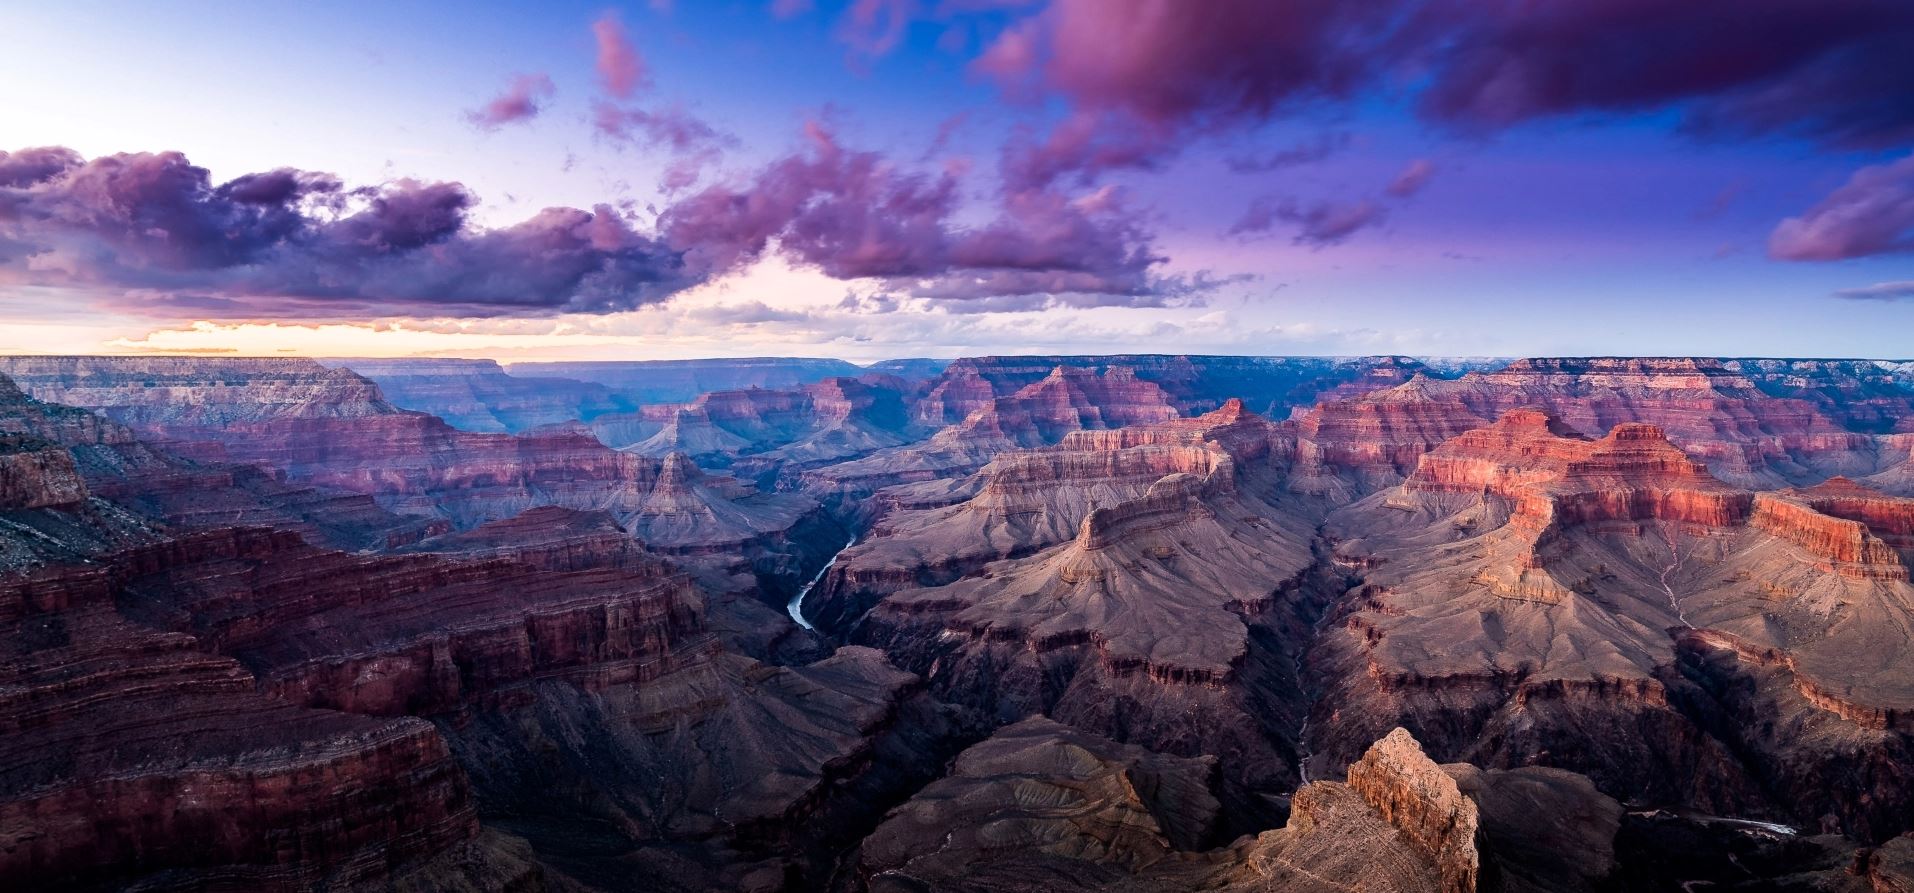 Grand Canyon National Park's natural beauty